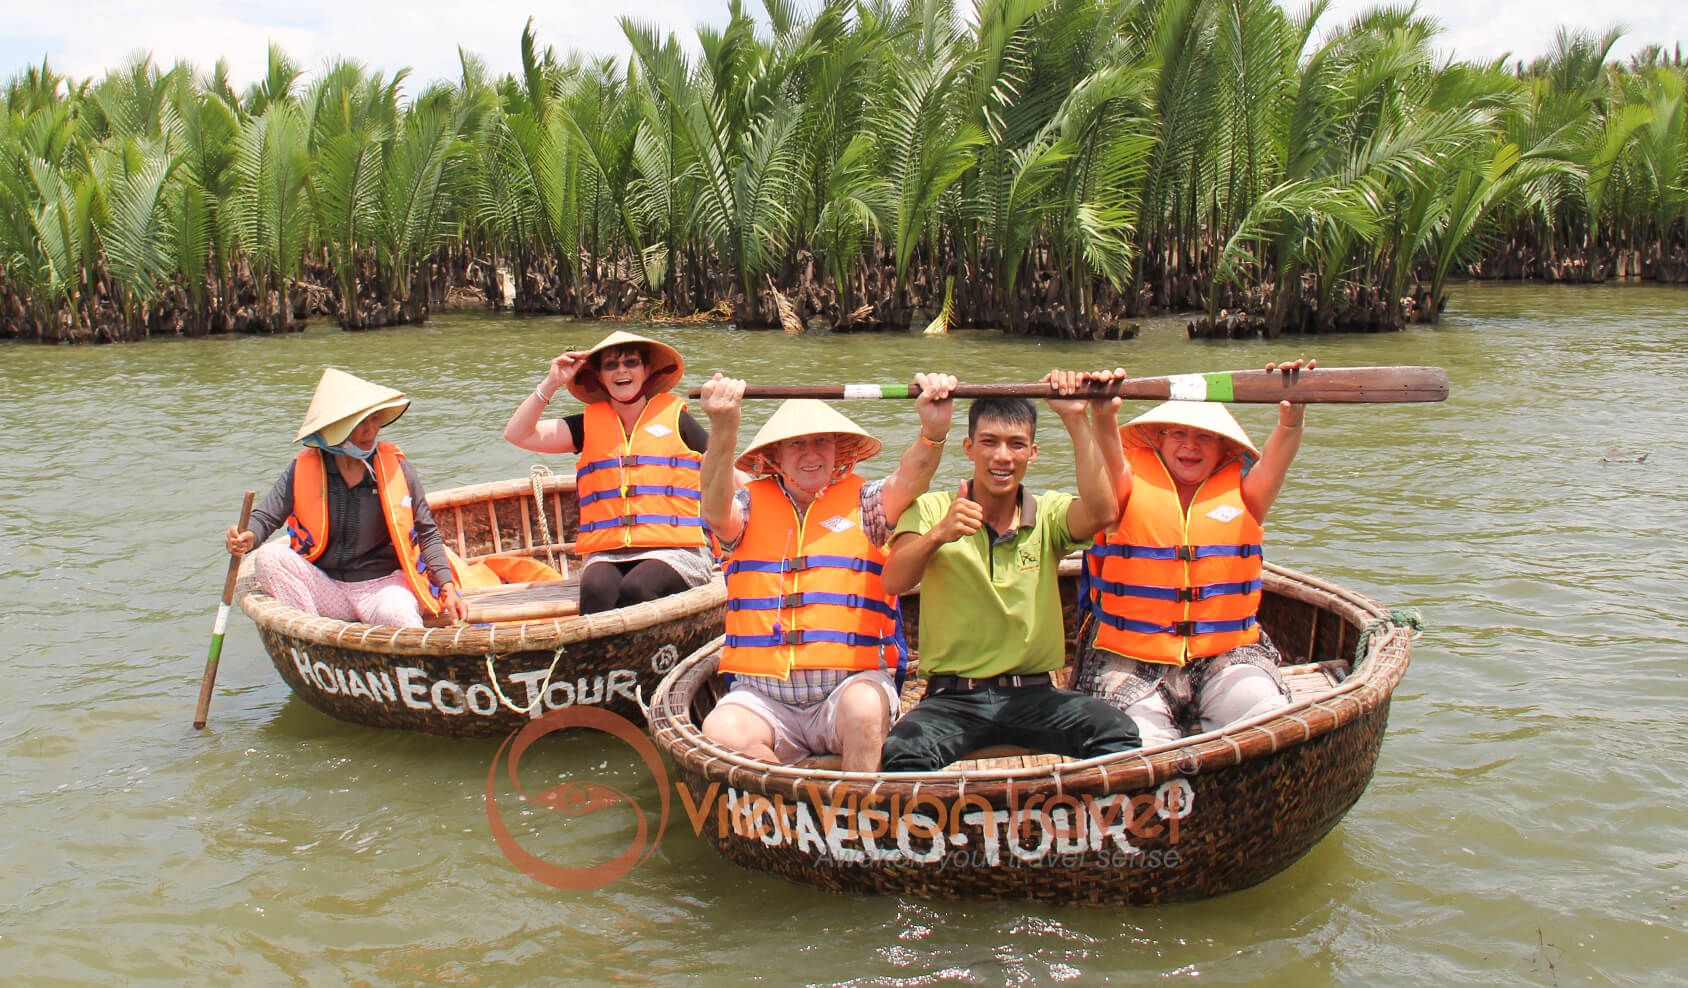 Leading Vietnam tour operator